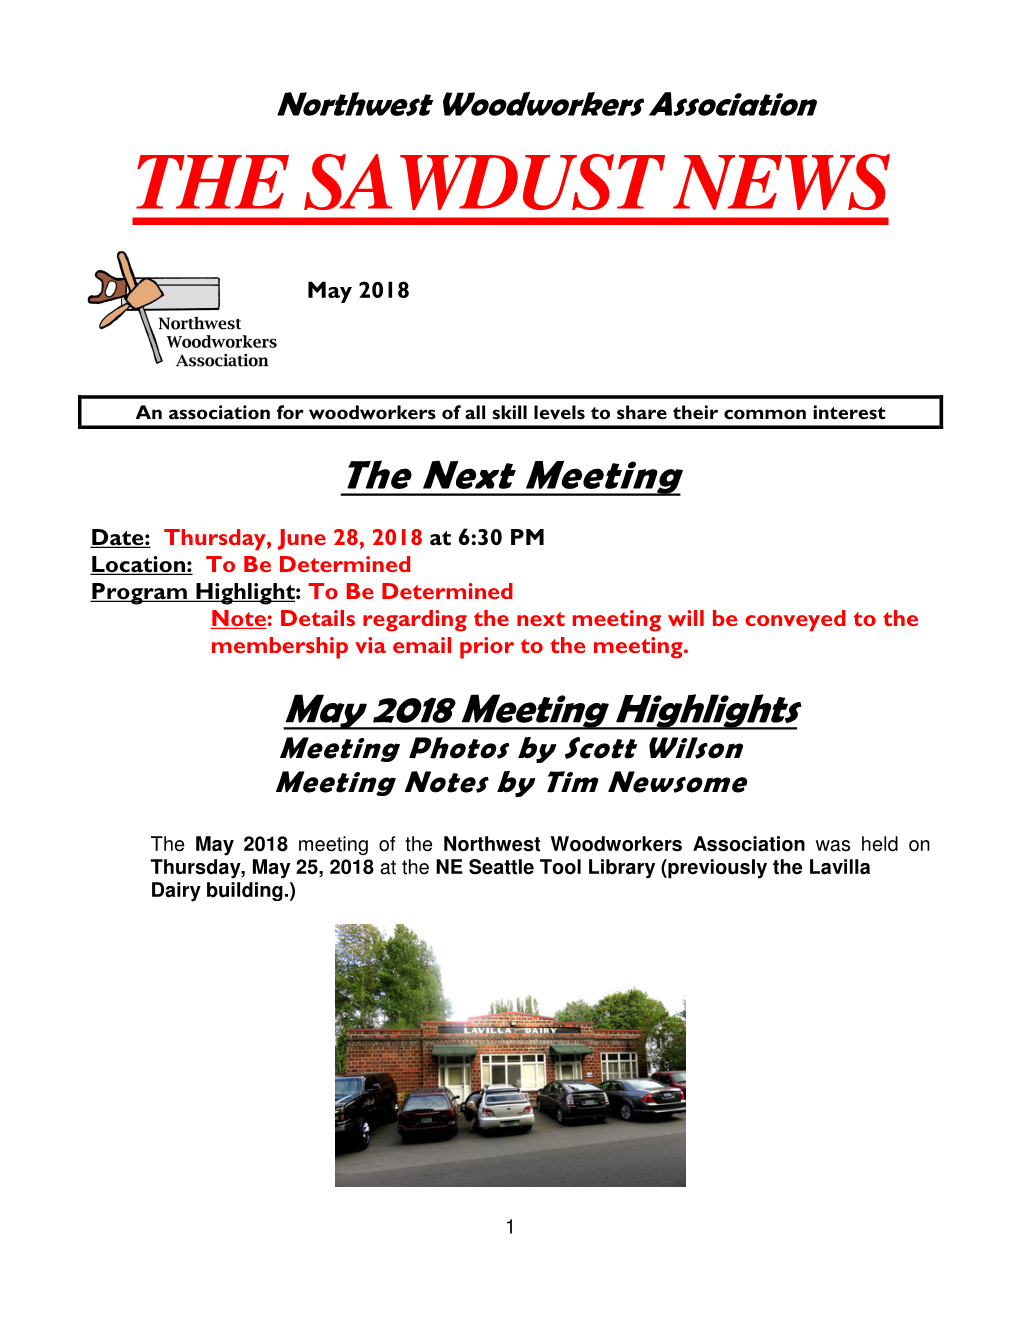 The Sawdust News